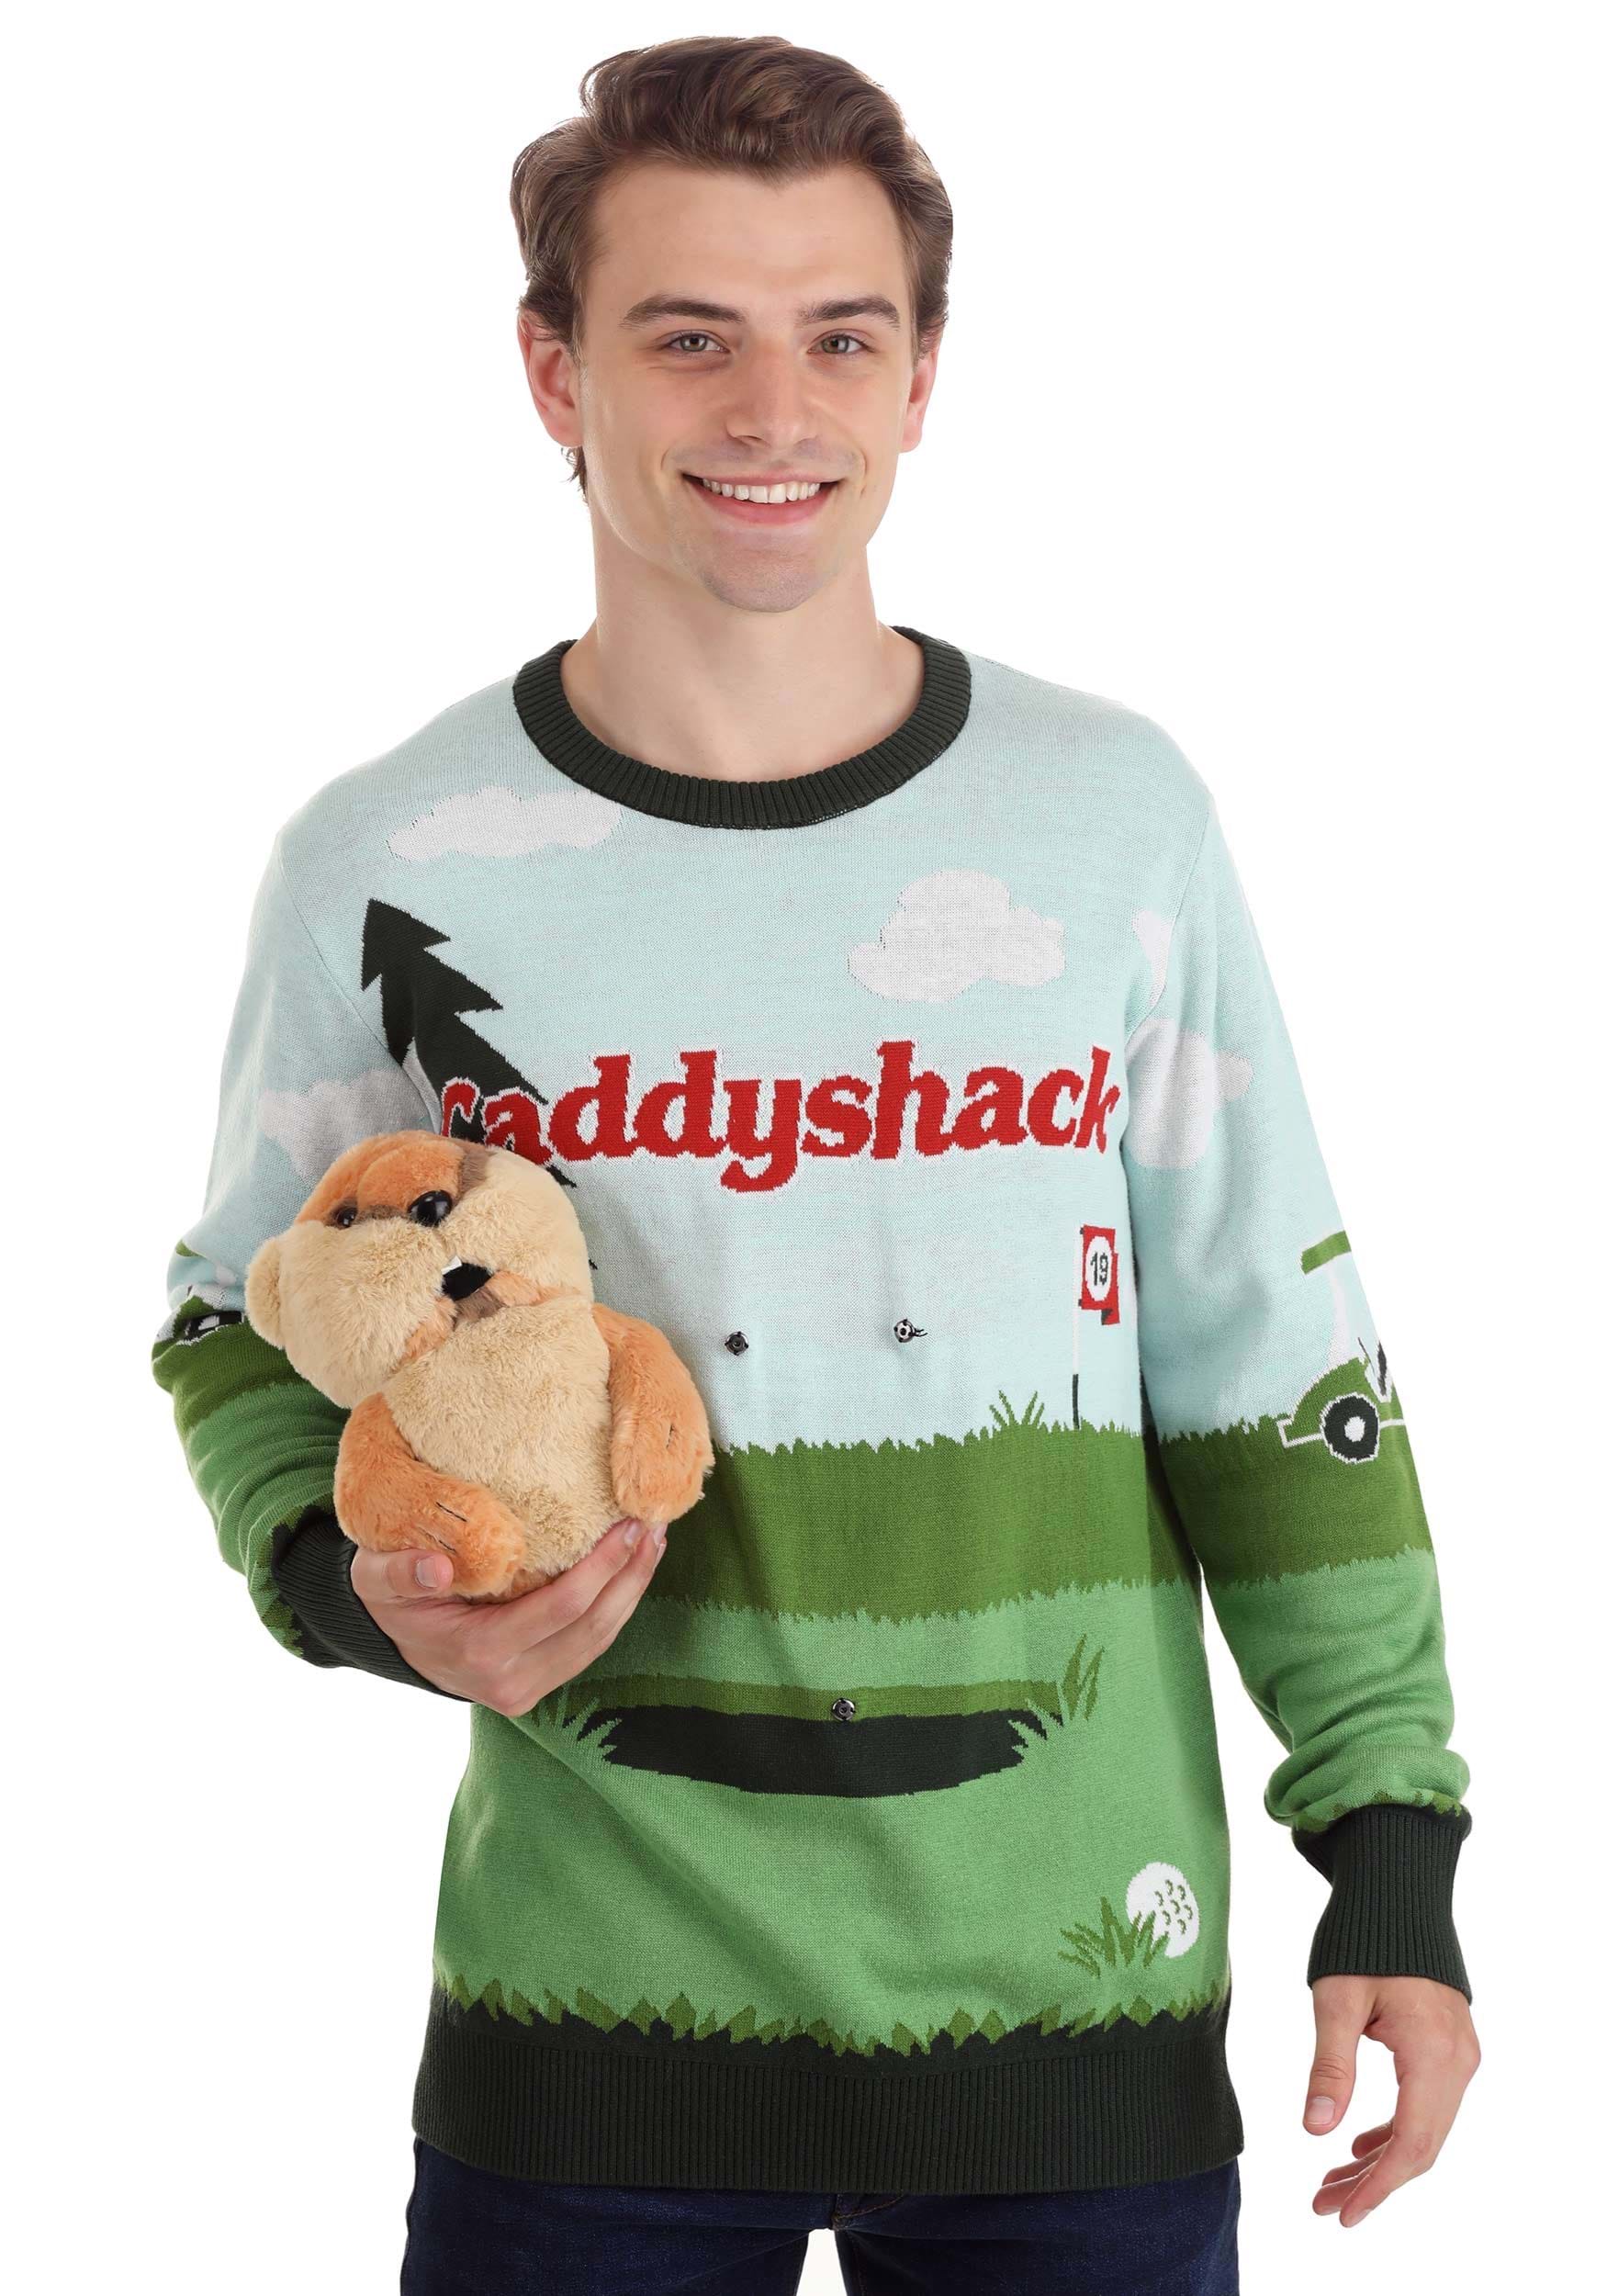 Caddyshack Adult Ugly Sweater